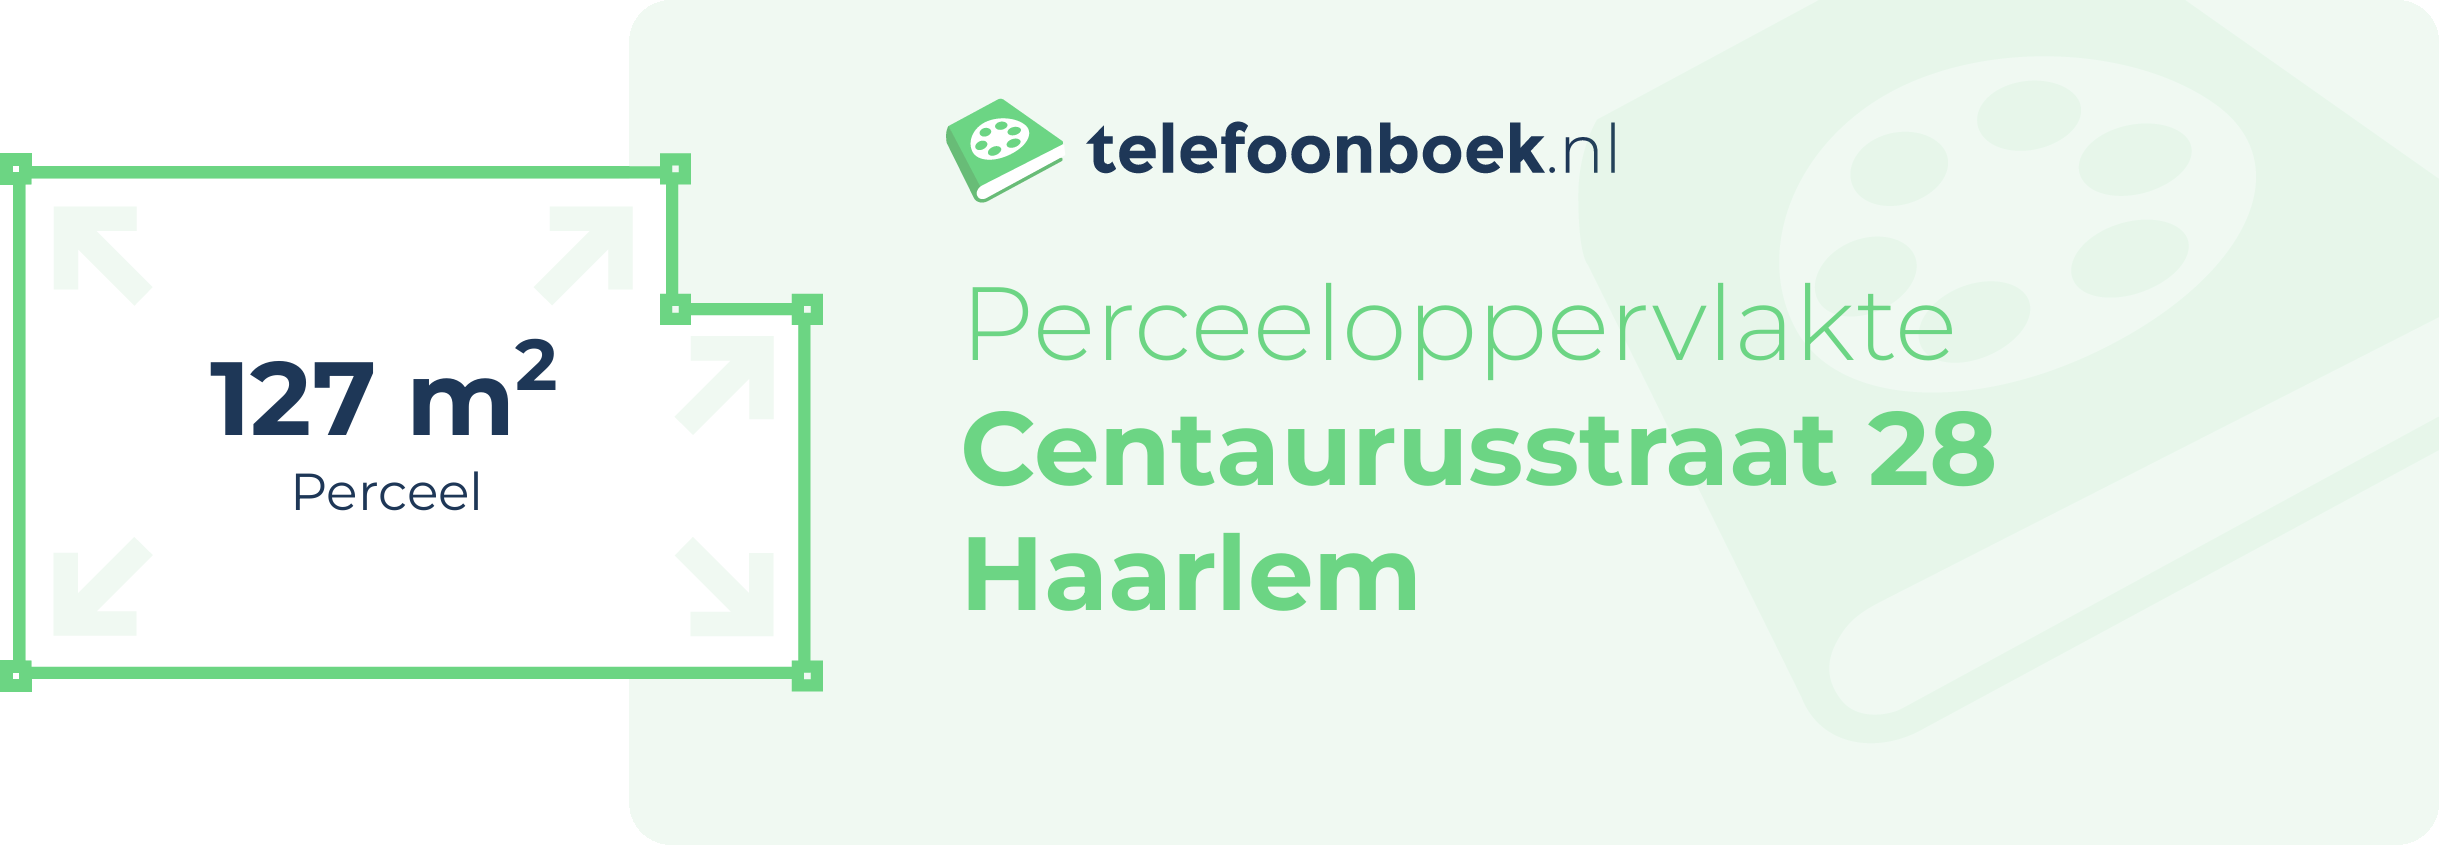 Perceeloppervlakte Centaurusstraat 28 Haarlem